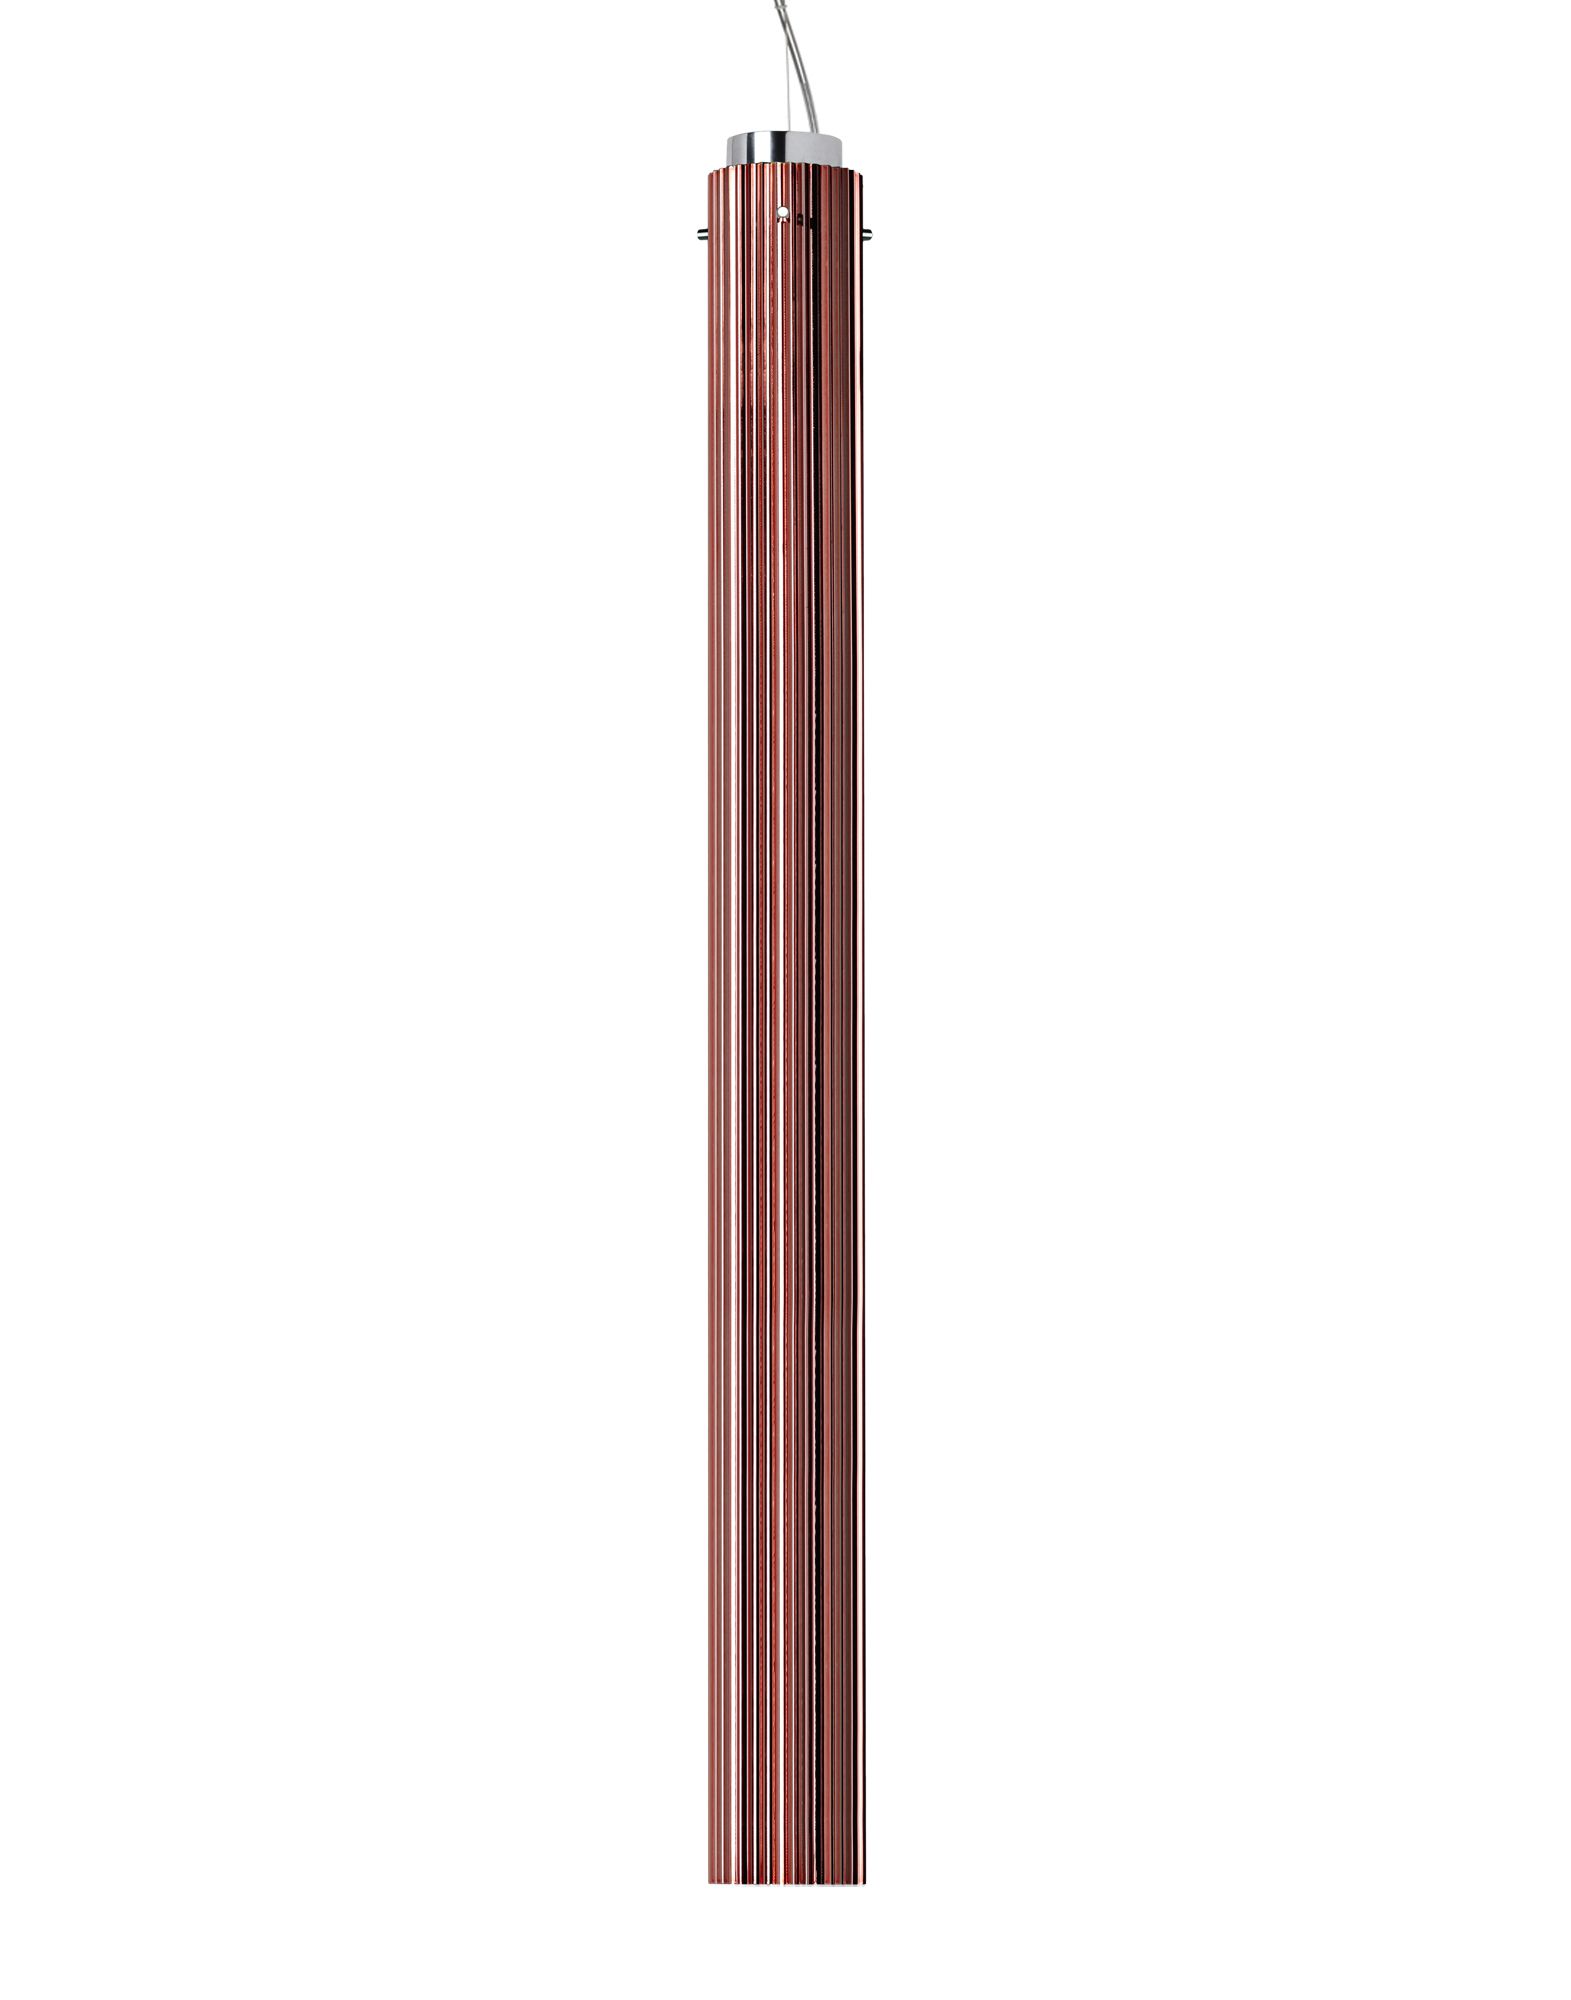 Suspensie Kartell by Laufen Rifly design Ludovica & Roberto Palomba LED 10W h90cm cupru metalizat 10W Decoratiuni